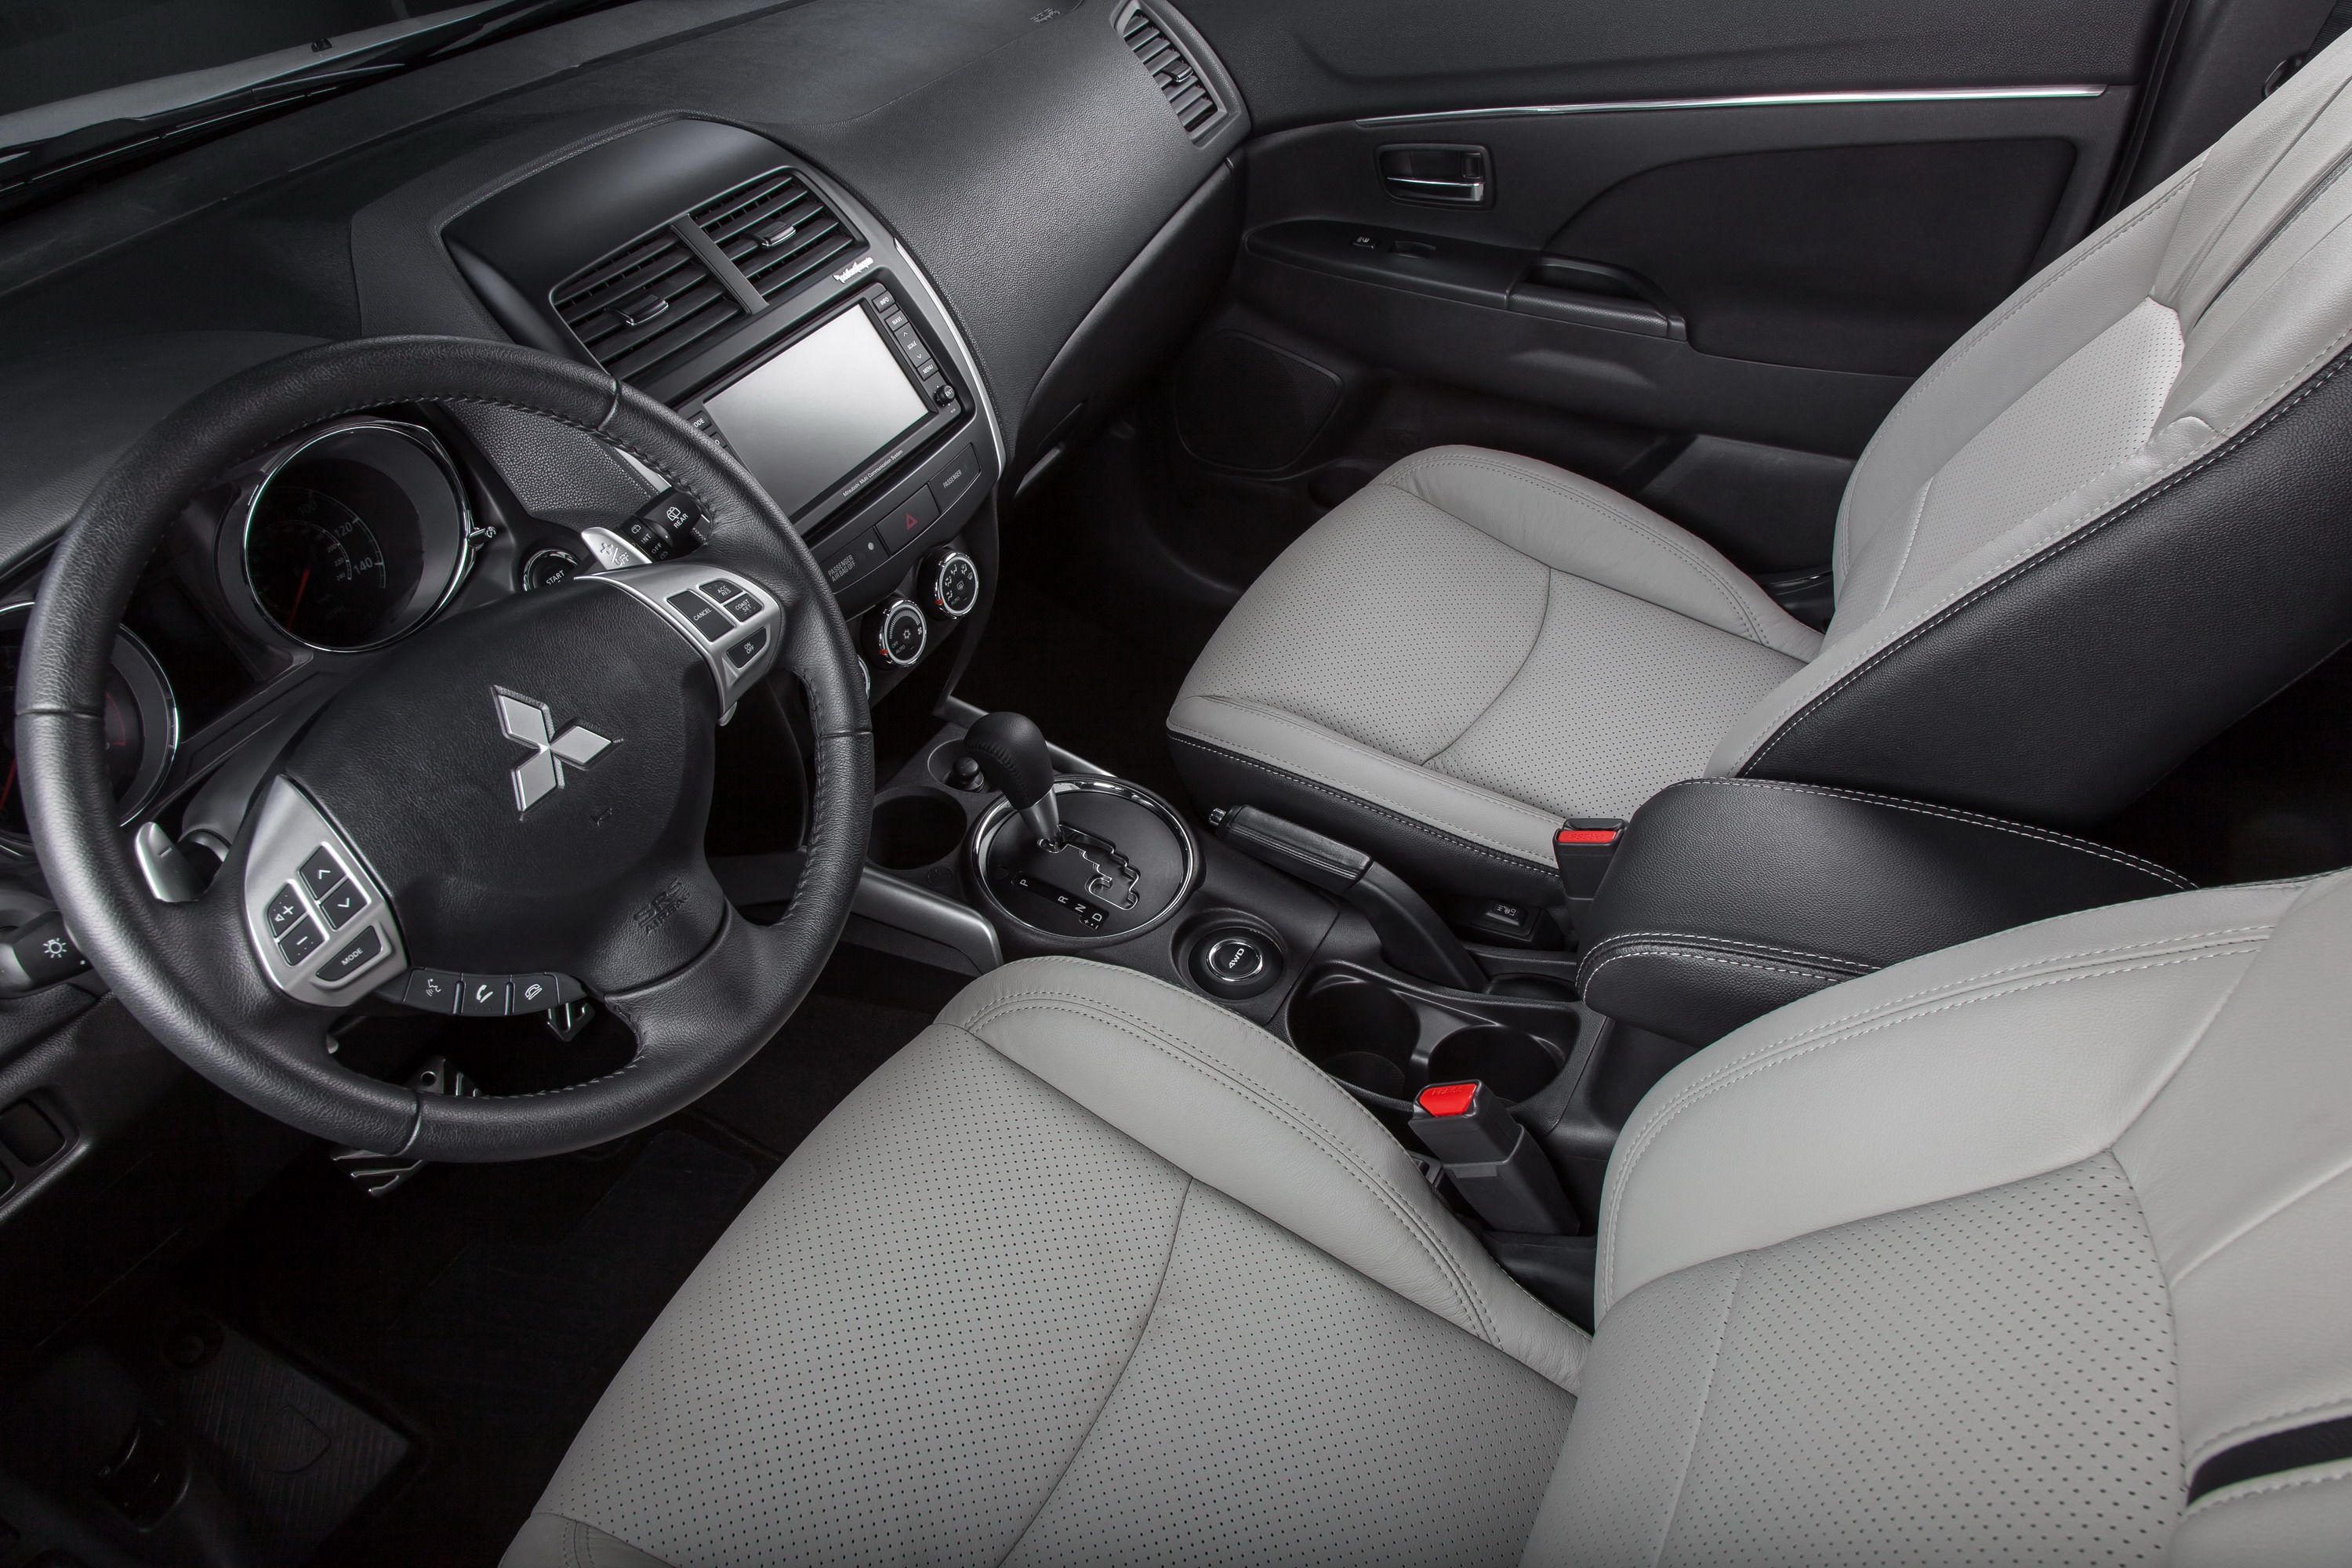 2013 Mitsubishi Outlander Sport Limited Edition